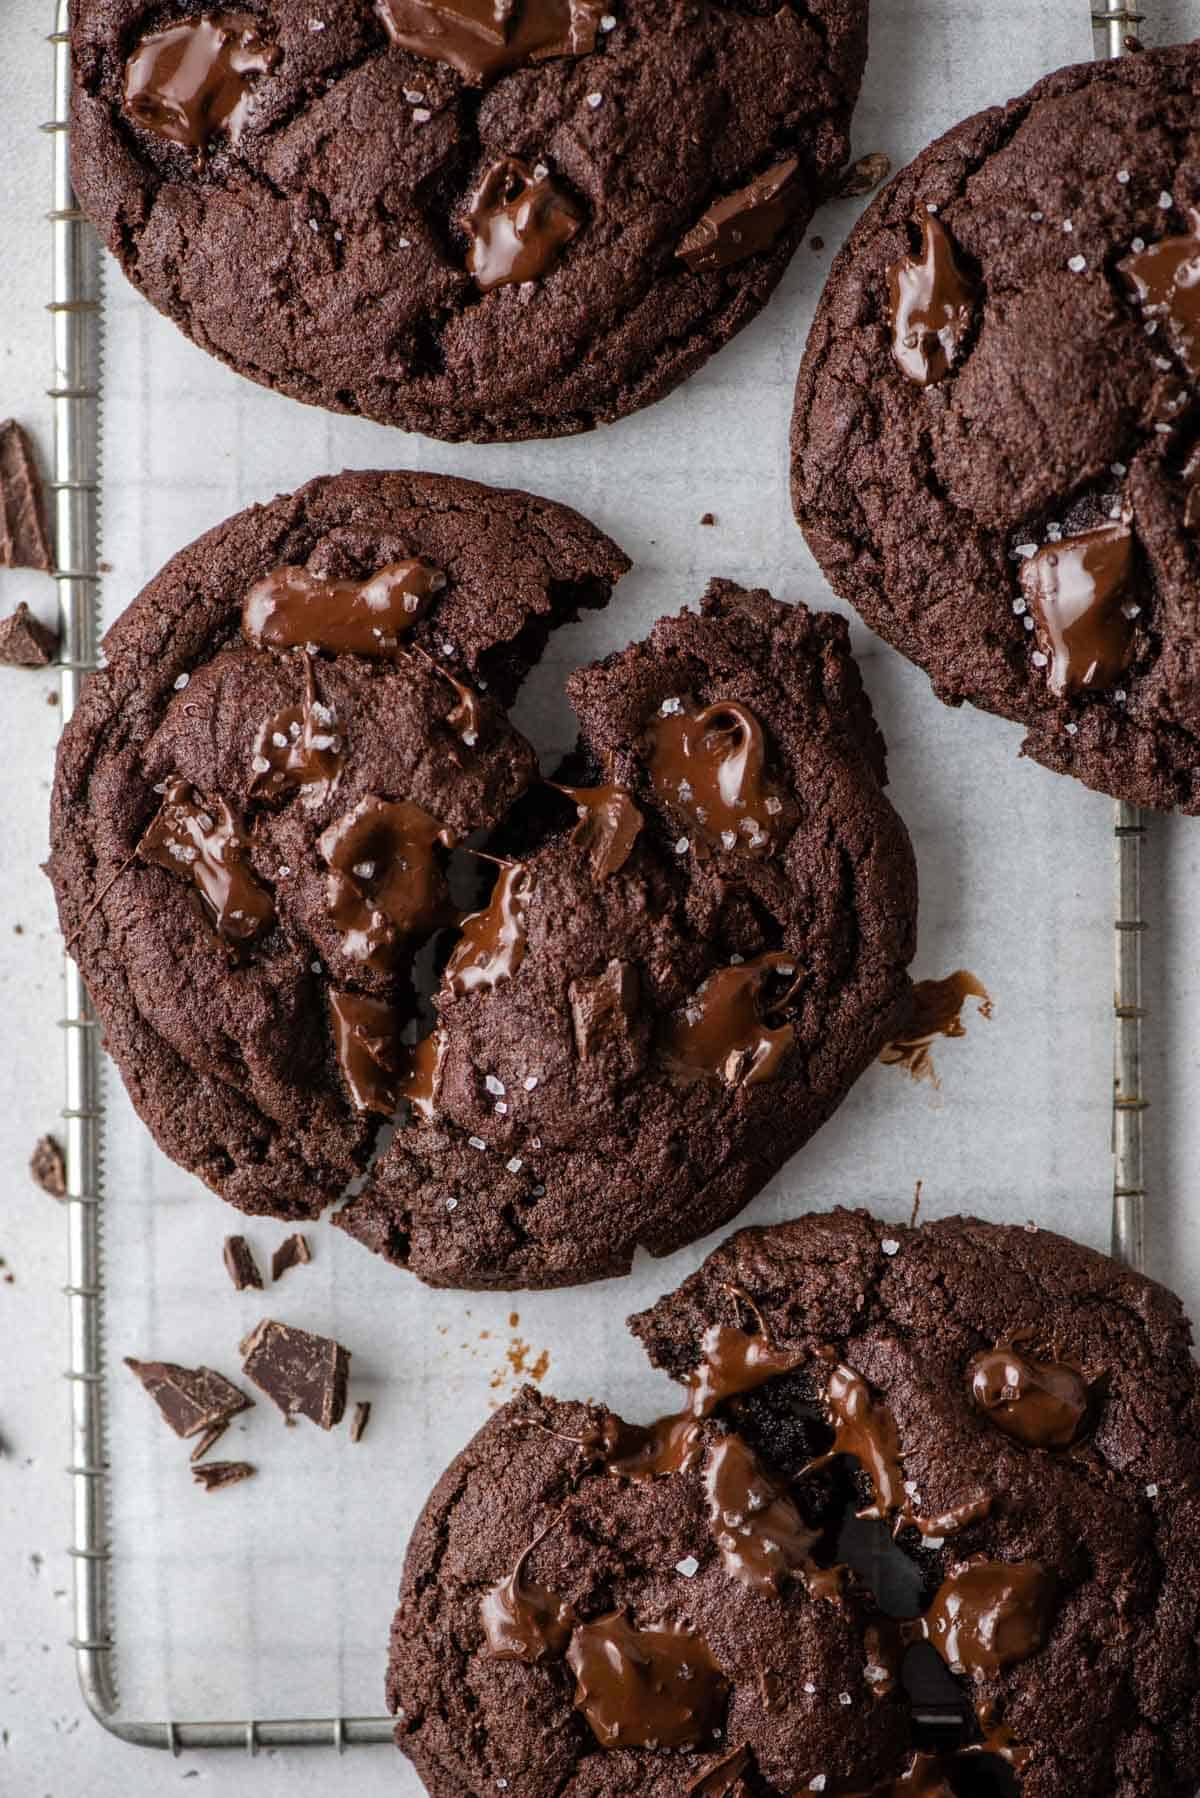 Overhead view of chocolate cookies